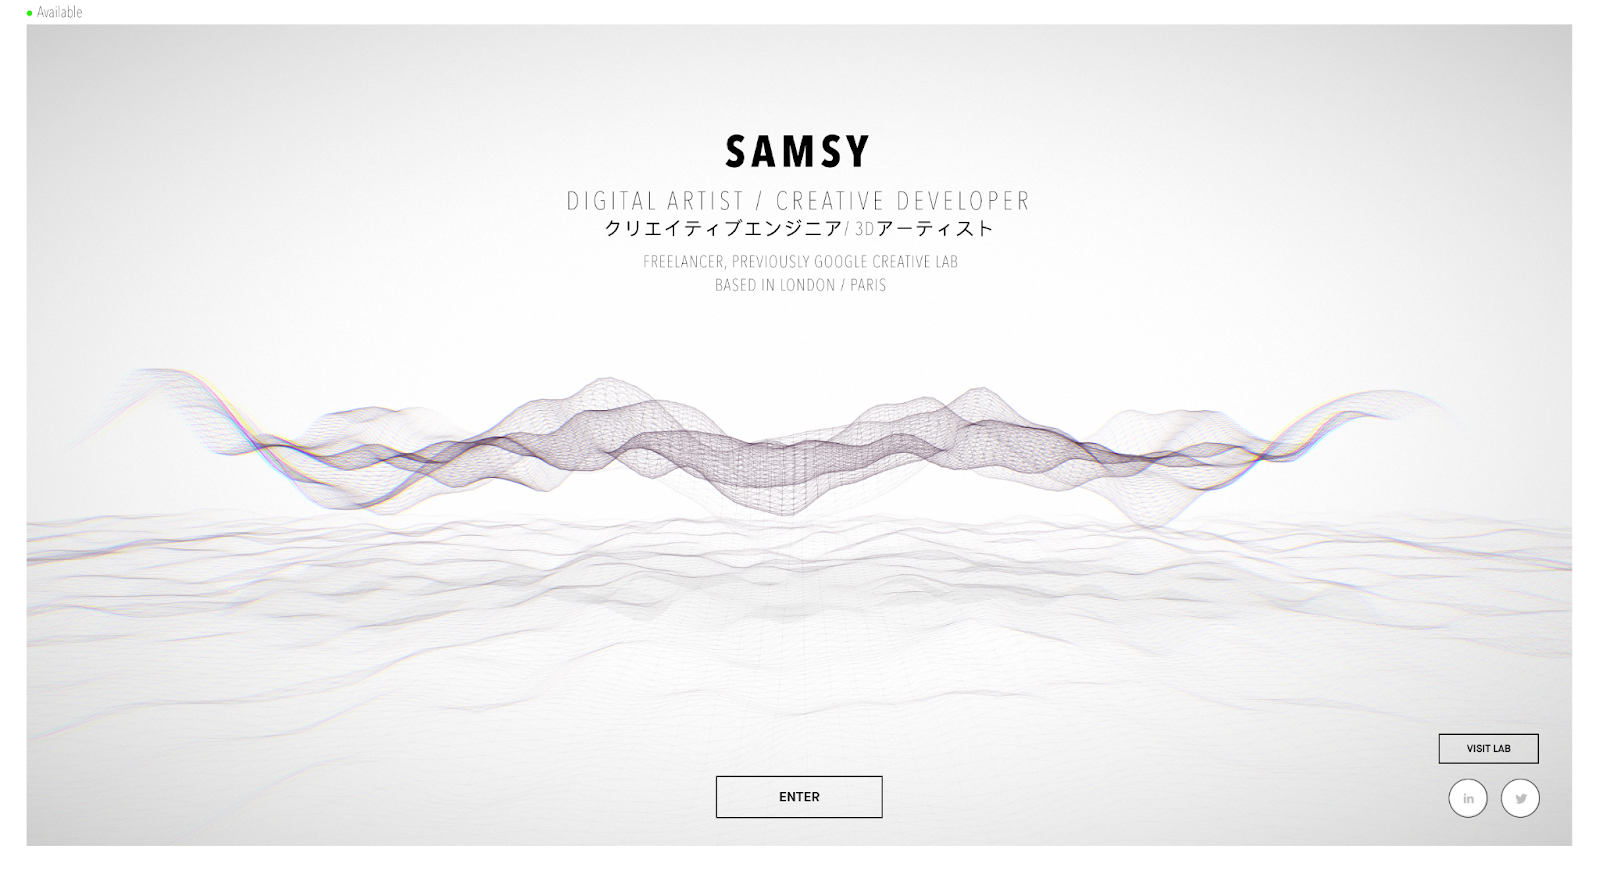 Samsy's portfolio homepage